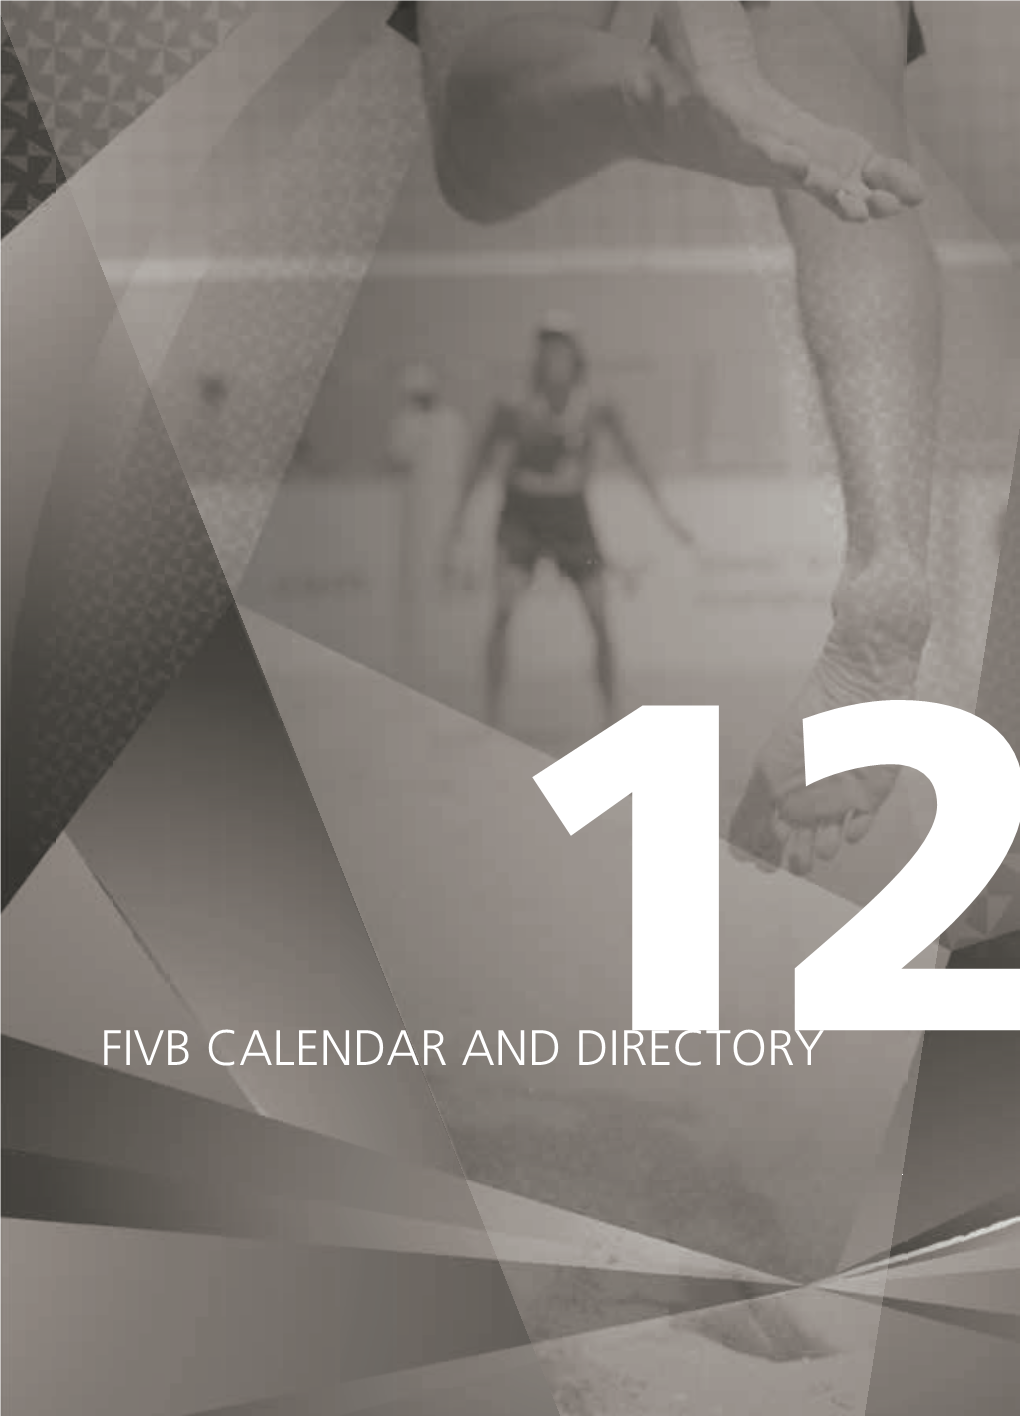 Fivb Calendar and Directory